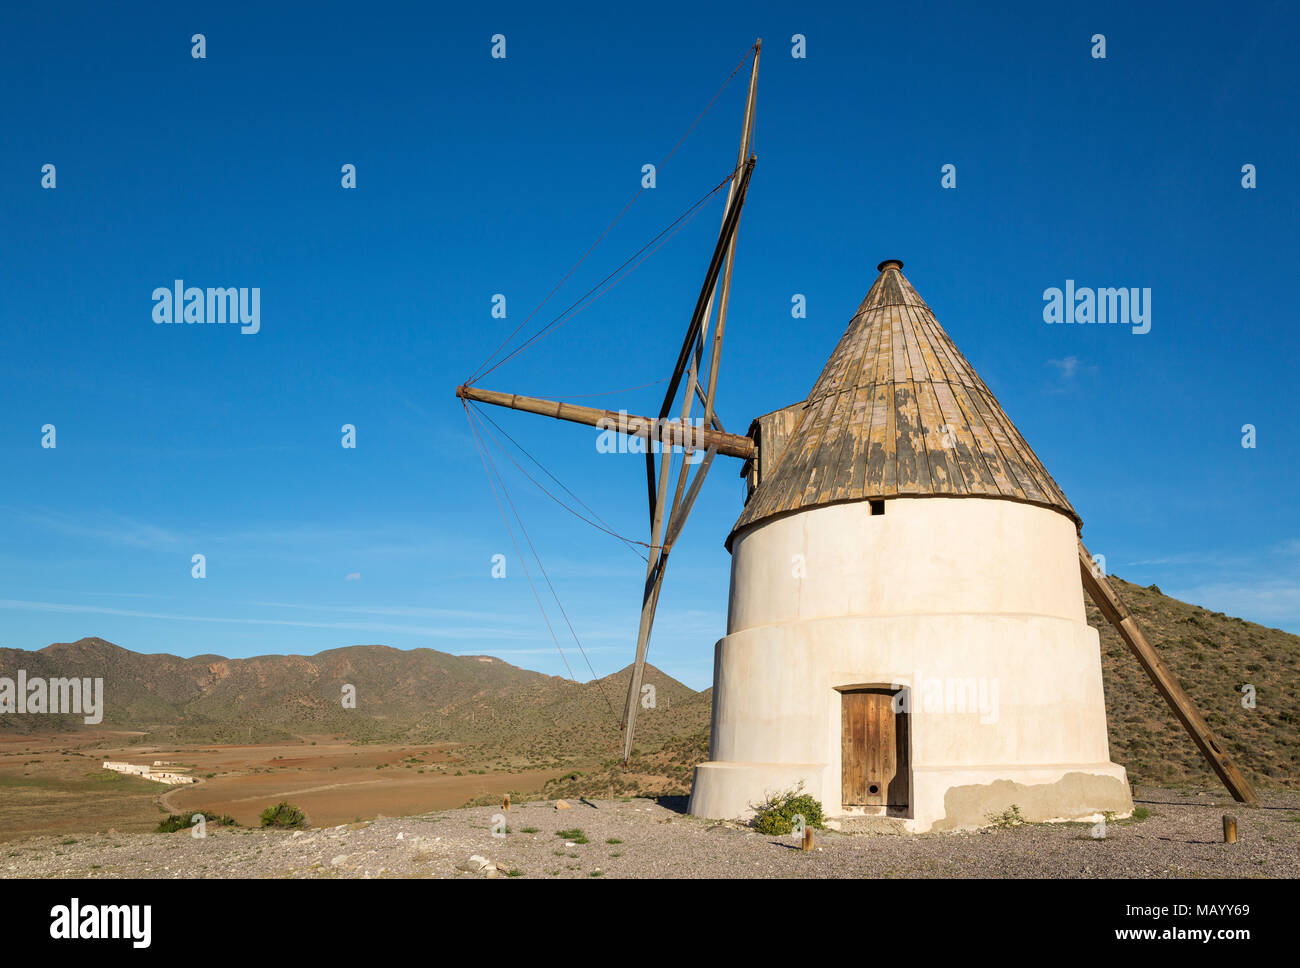 Le moulin Molino del Collado de los Genoveses, réserve naturelle de Cabo de Gata-Nijar, la province d'Almeria, Andalousie, Espagne Banque D'Images